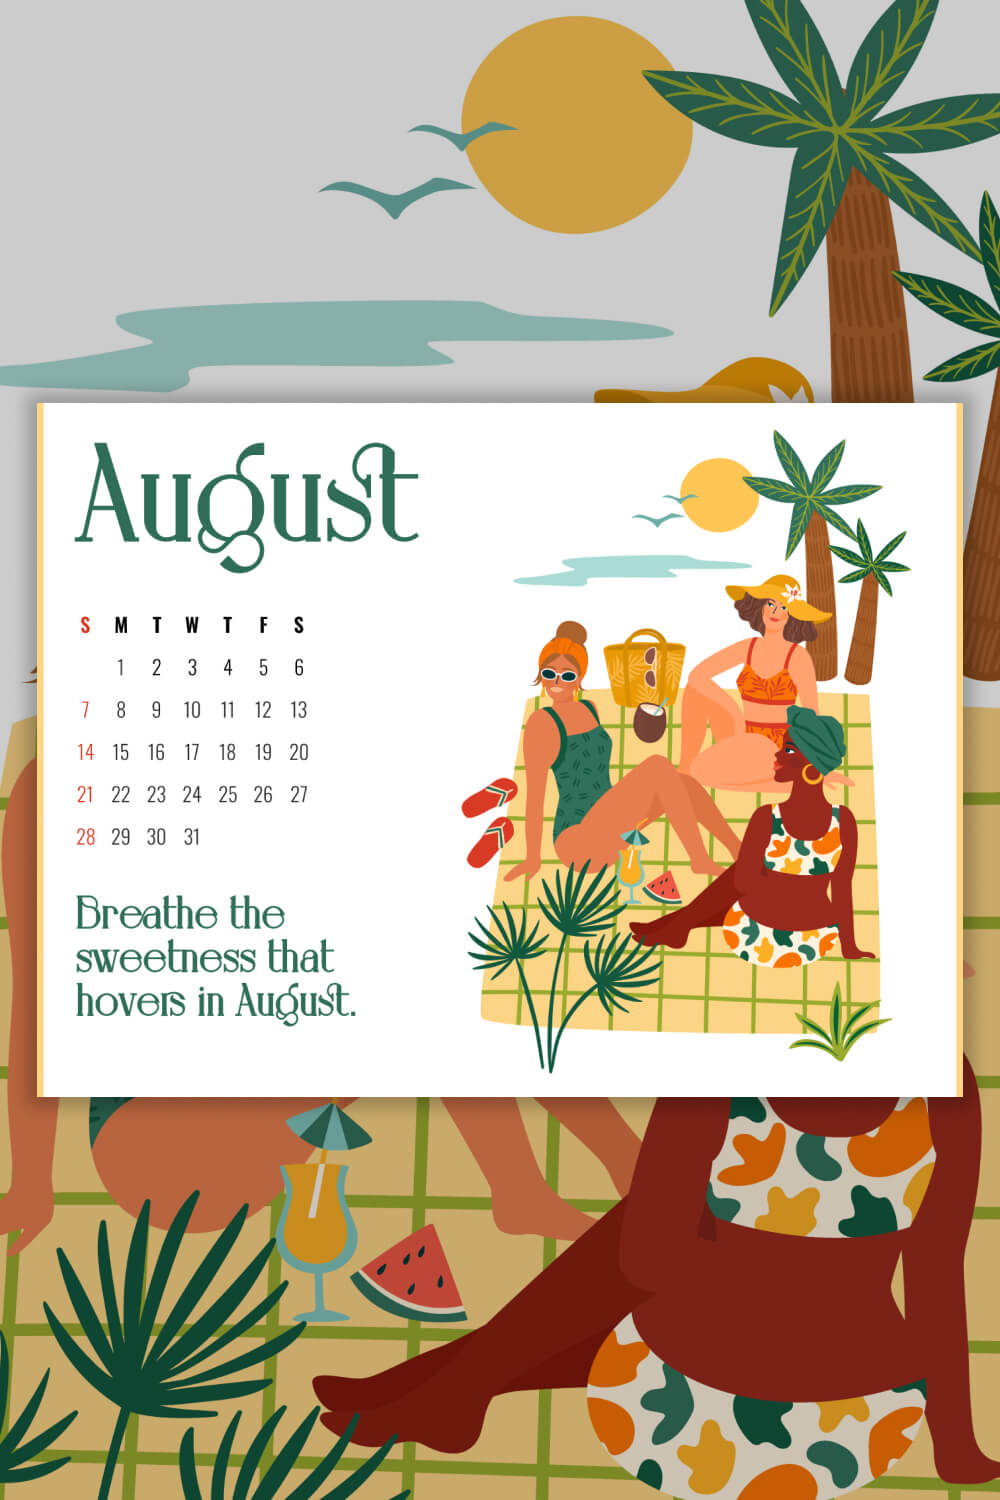 Free Fully Editable August Vacation Printable Calendar Pinterest Image.